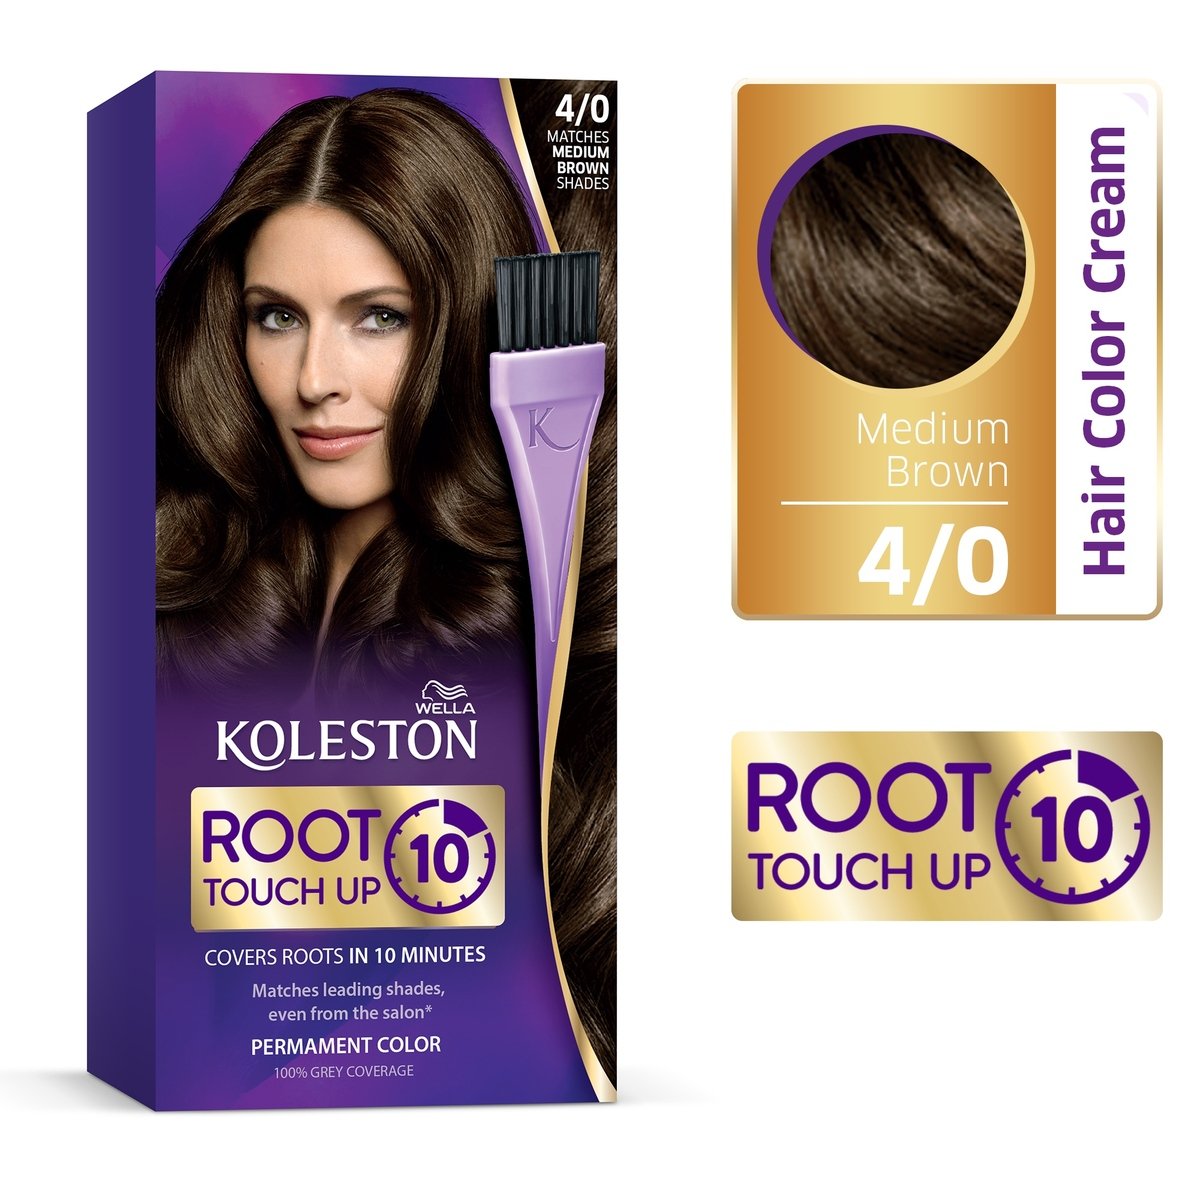 Koleston Root Touch Up 4/0 Medium Brown 1 pkt